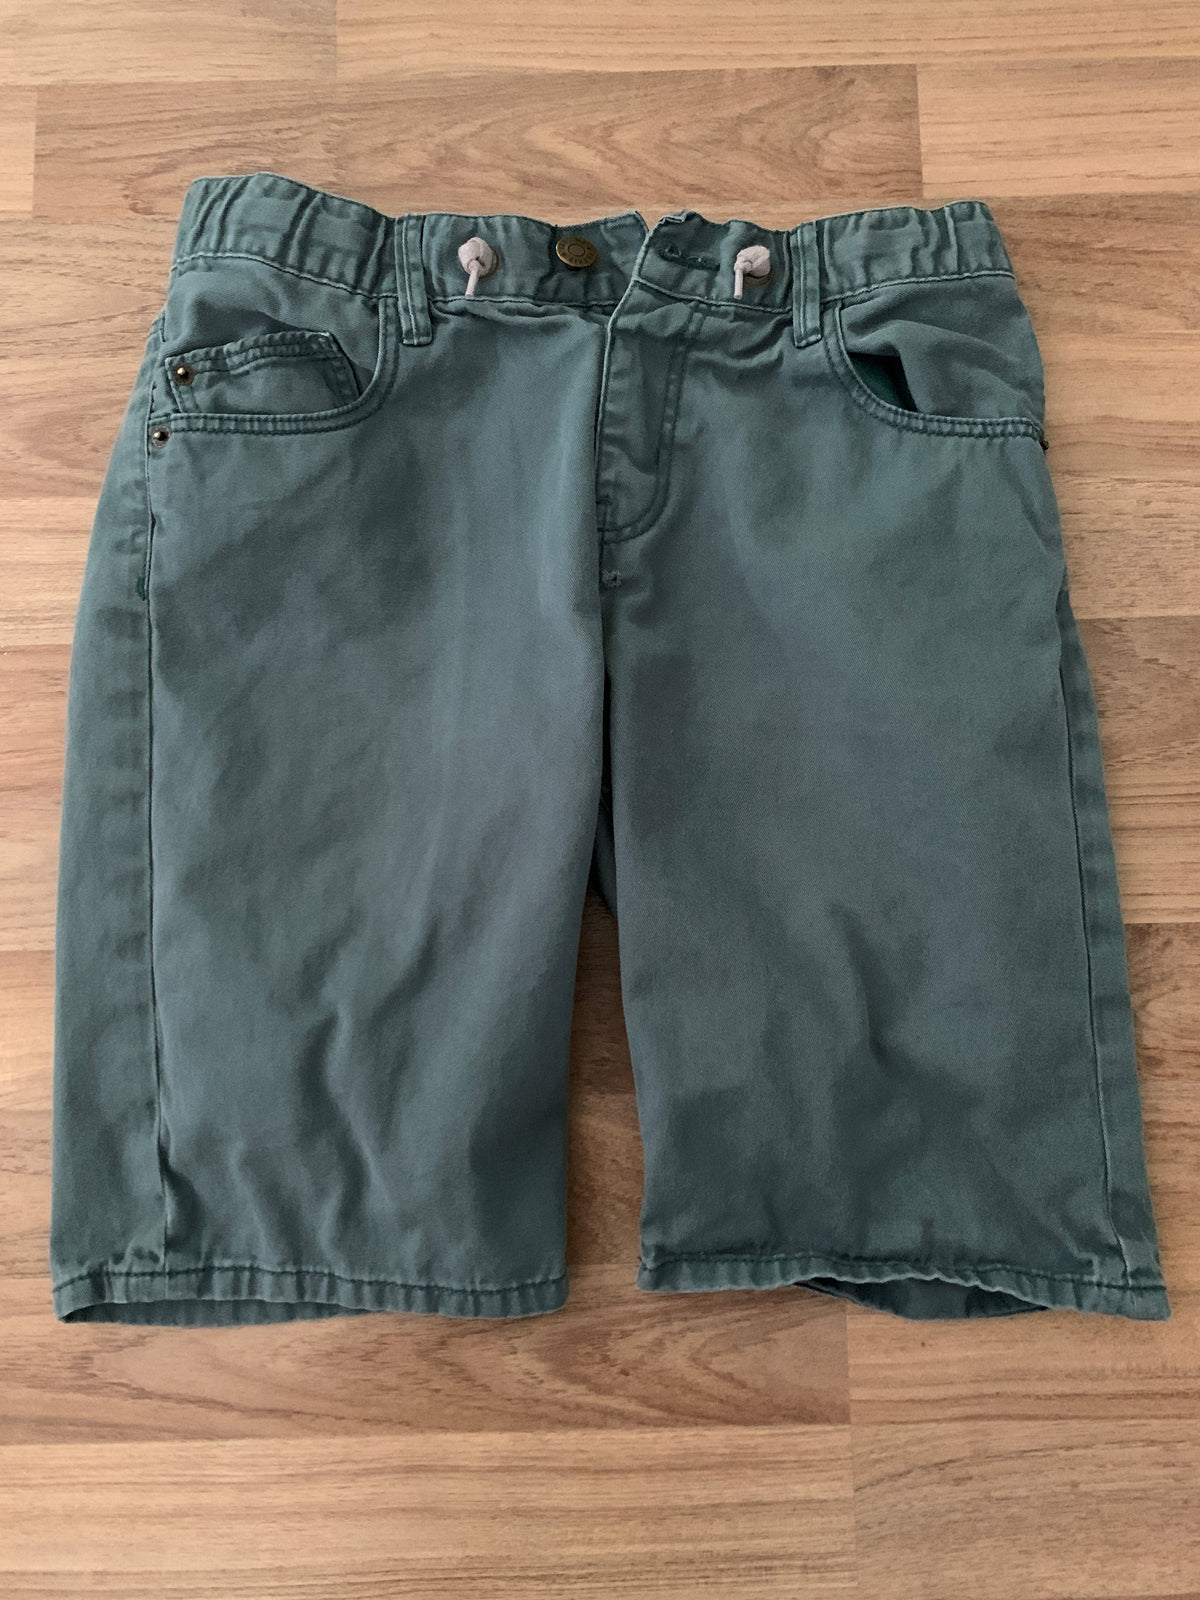 Shorts (Boys Size 11-12)